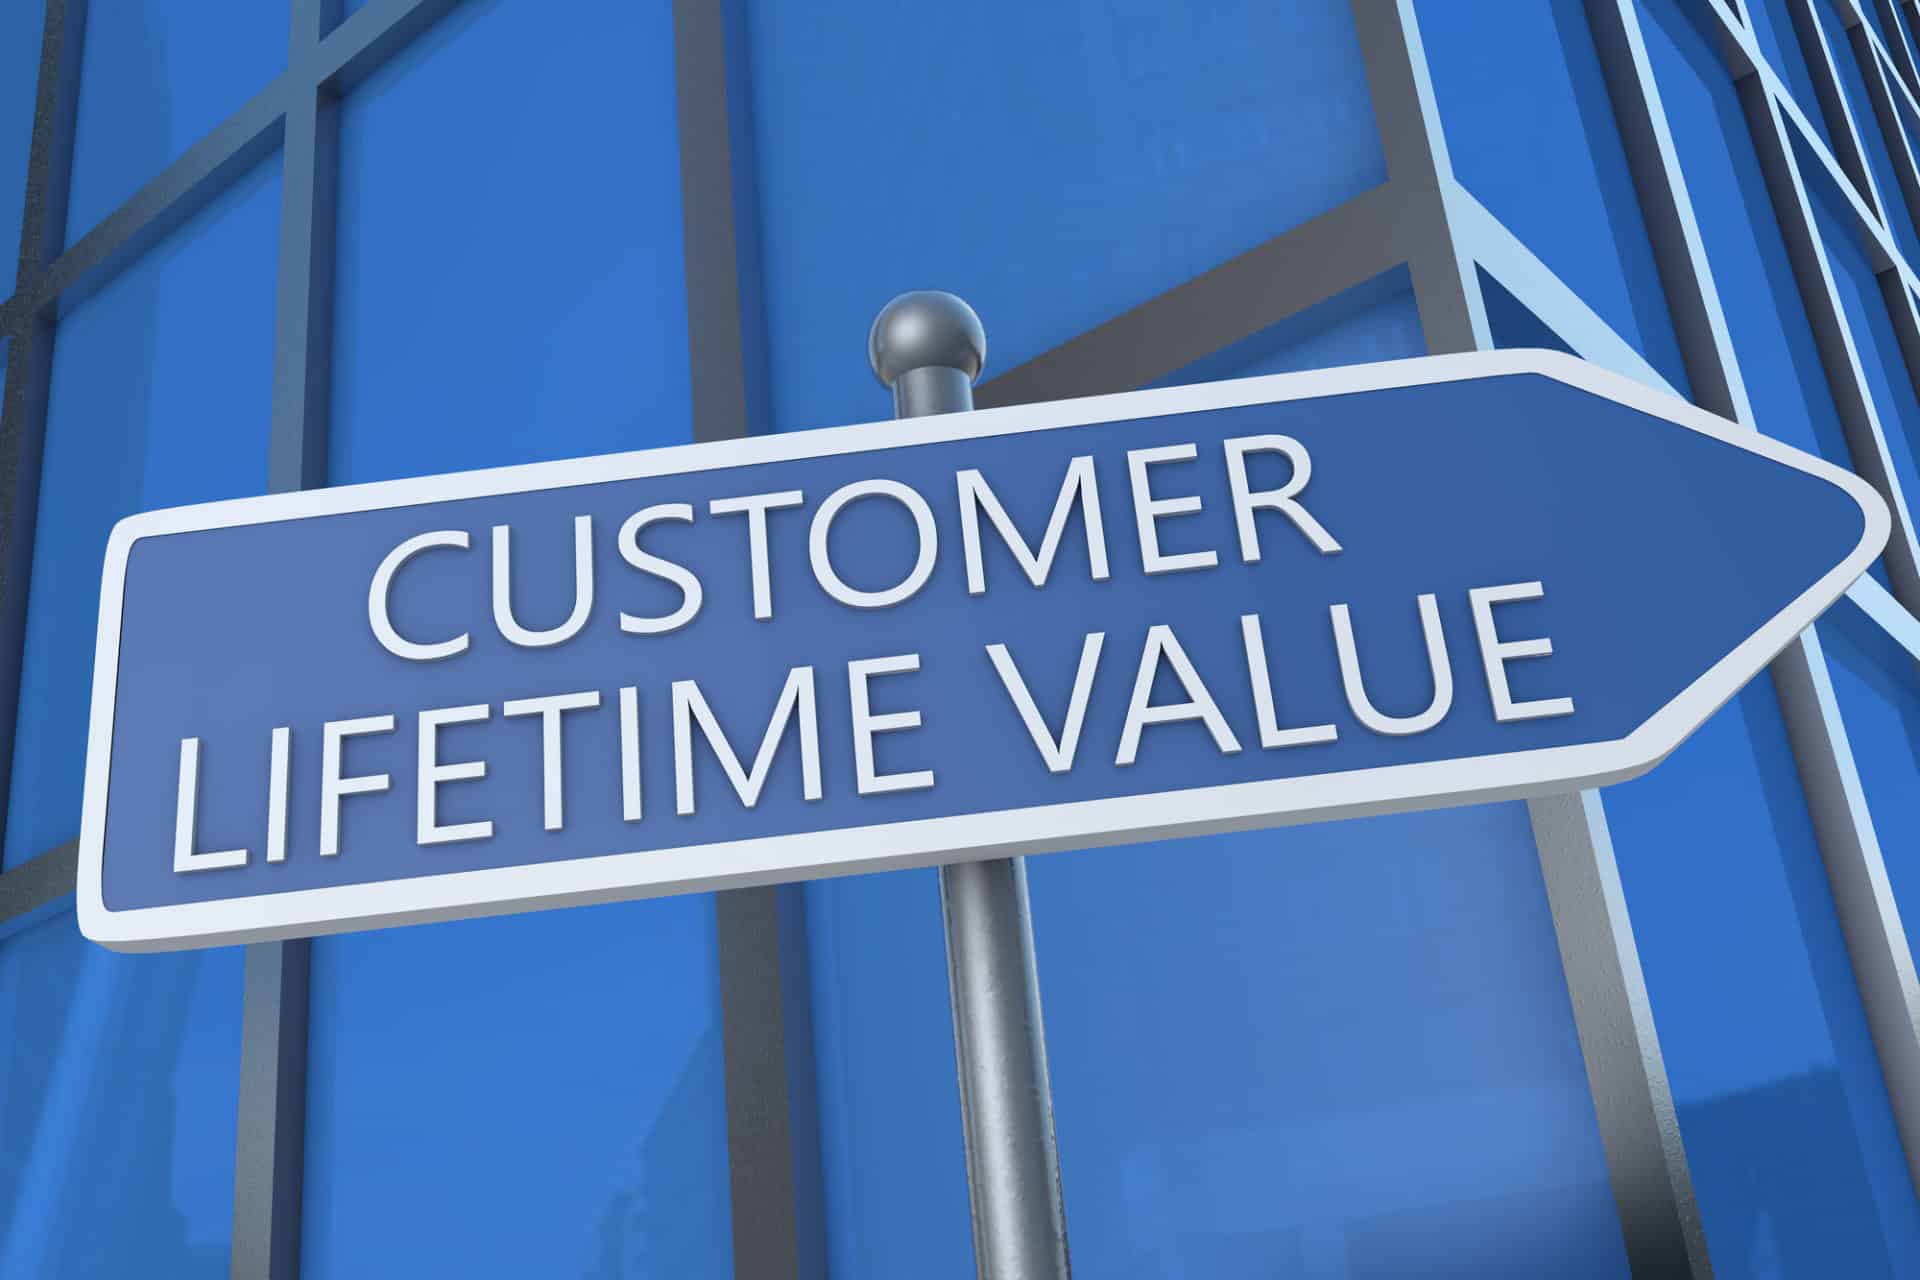 Customer Lifetime Value (CLV)